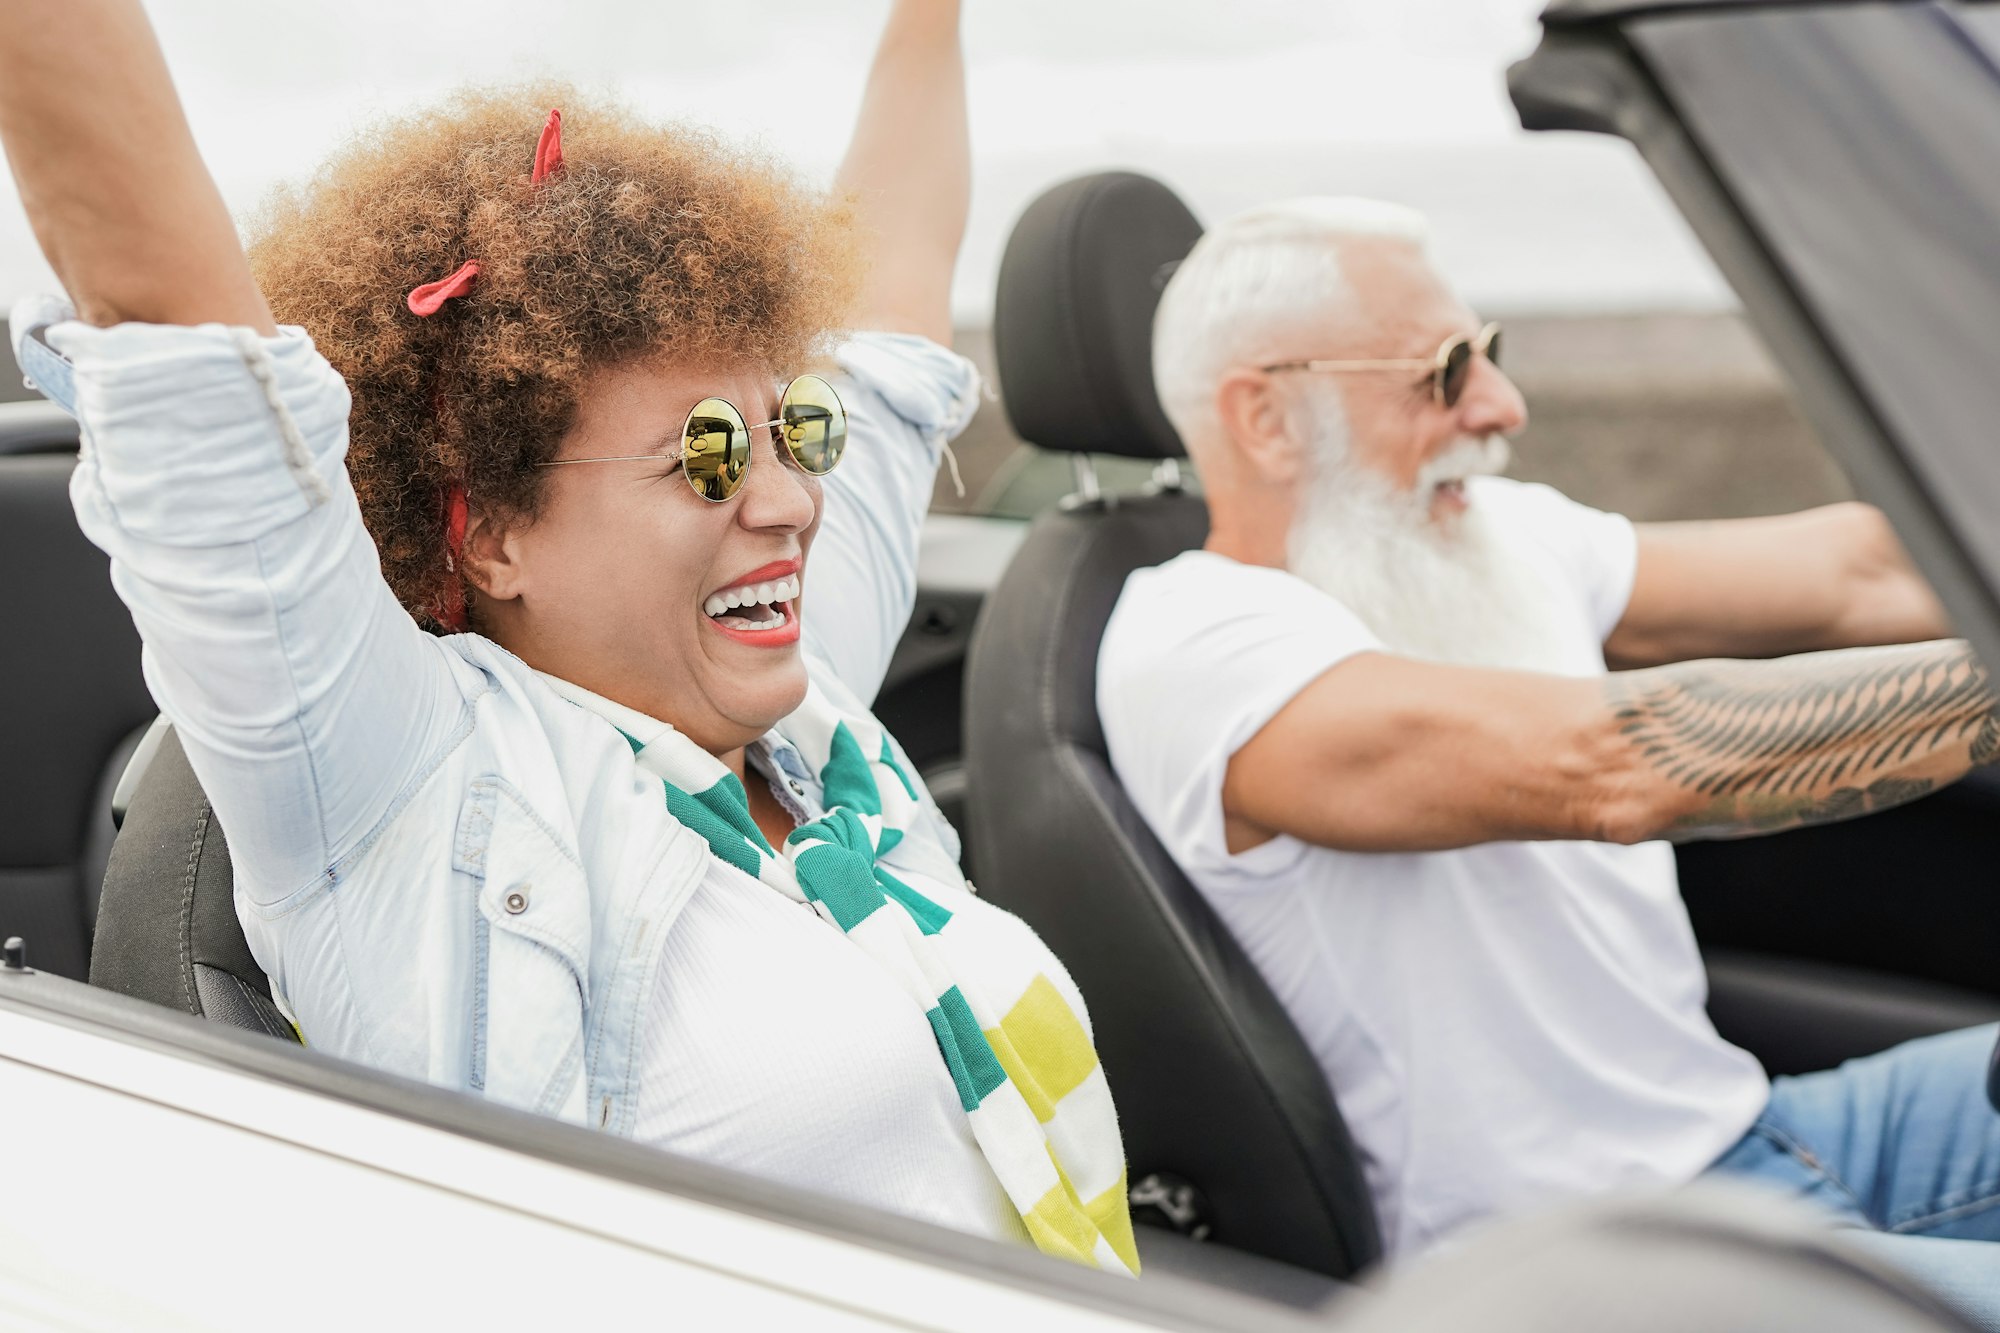 Senior multiracial couple having fun with convertible car during road trip vacation